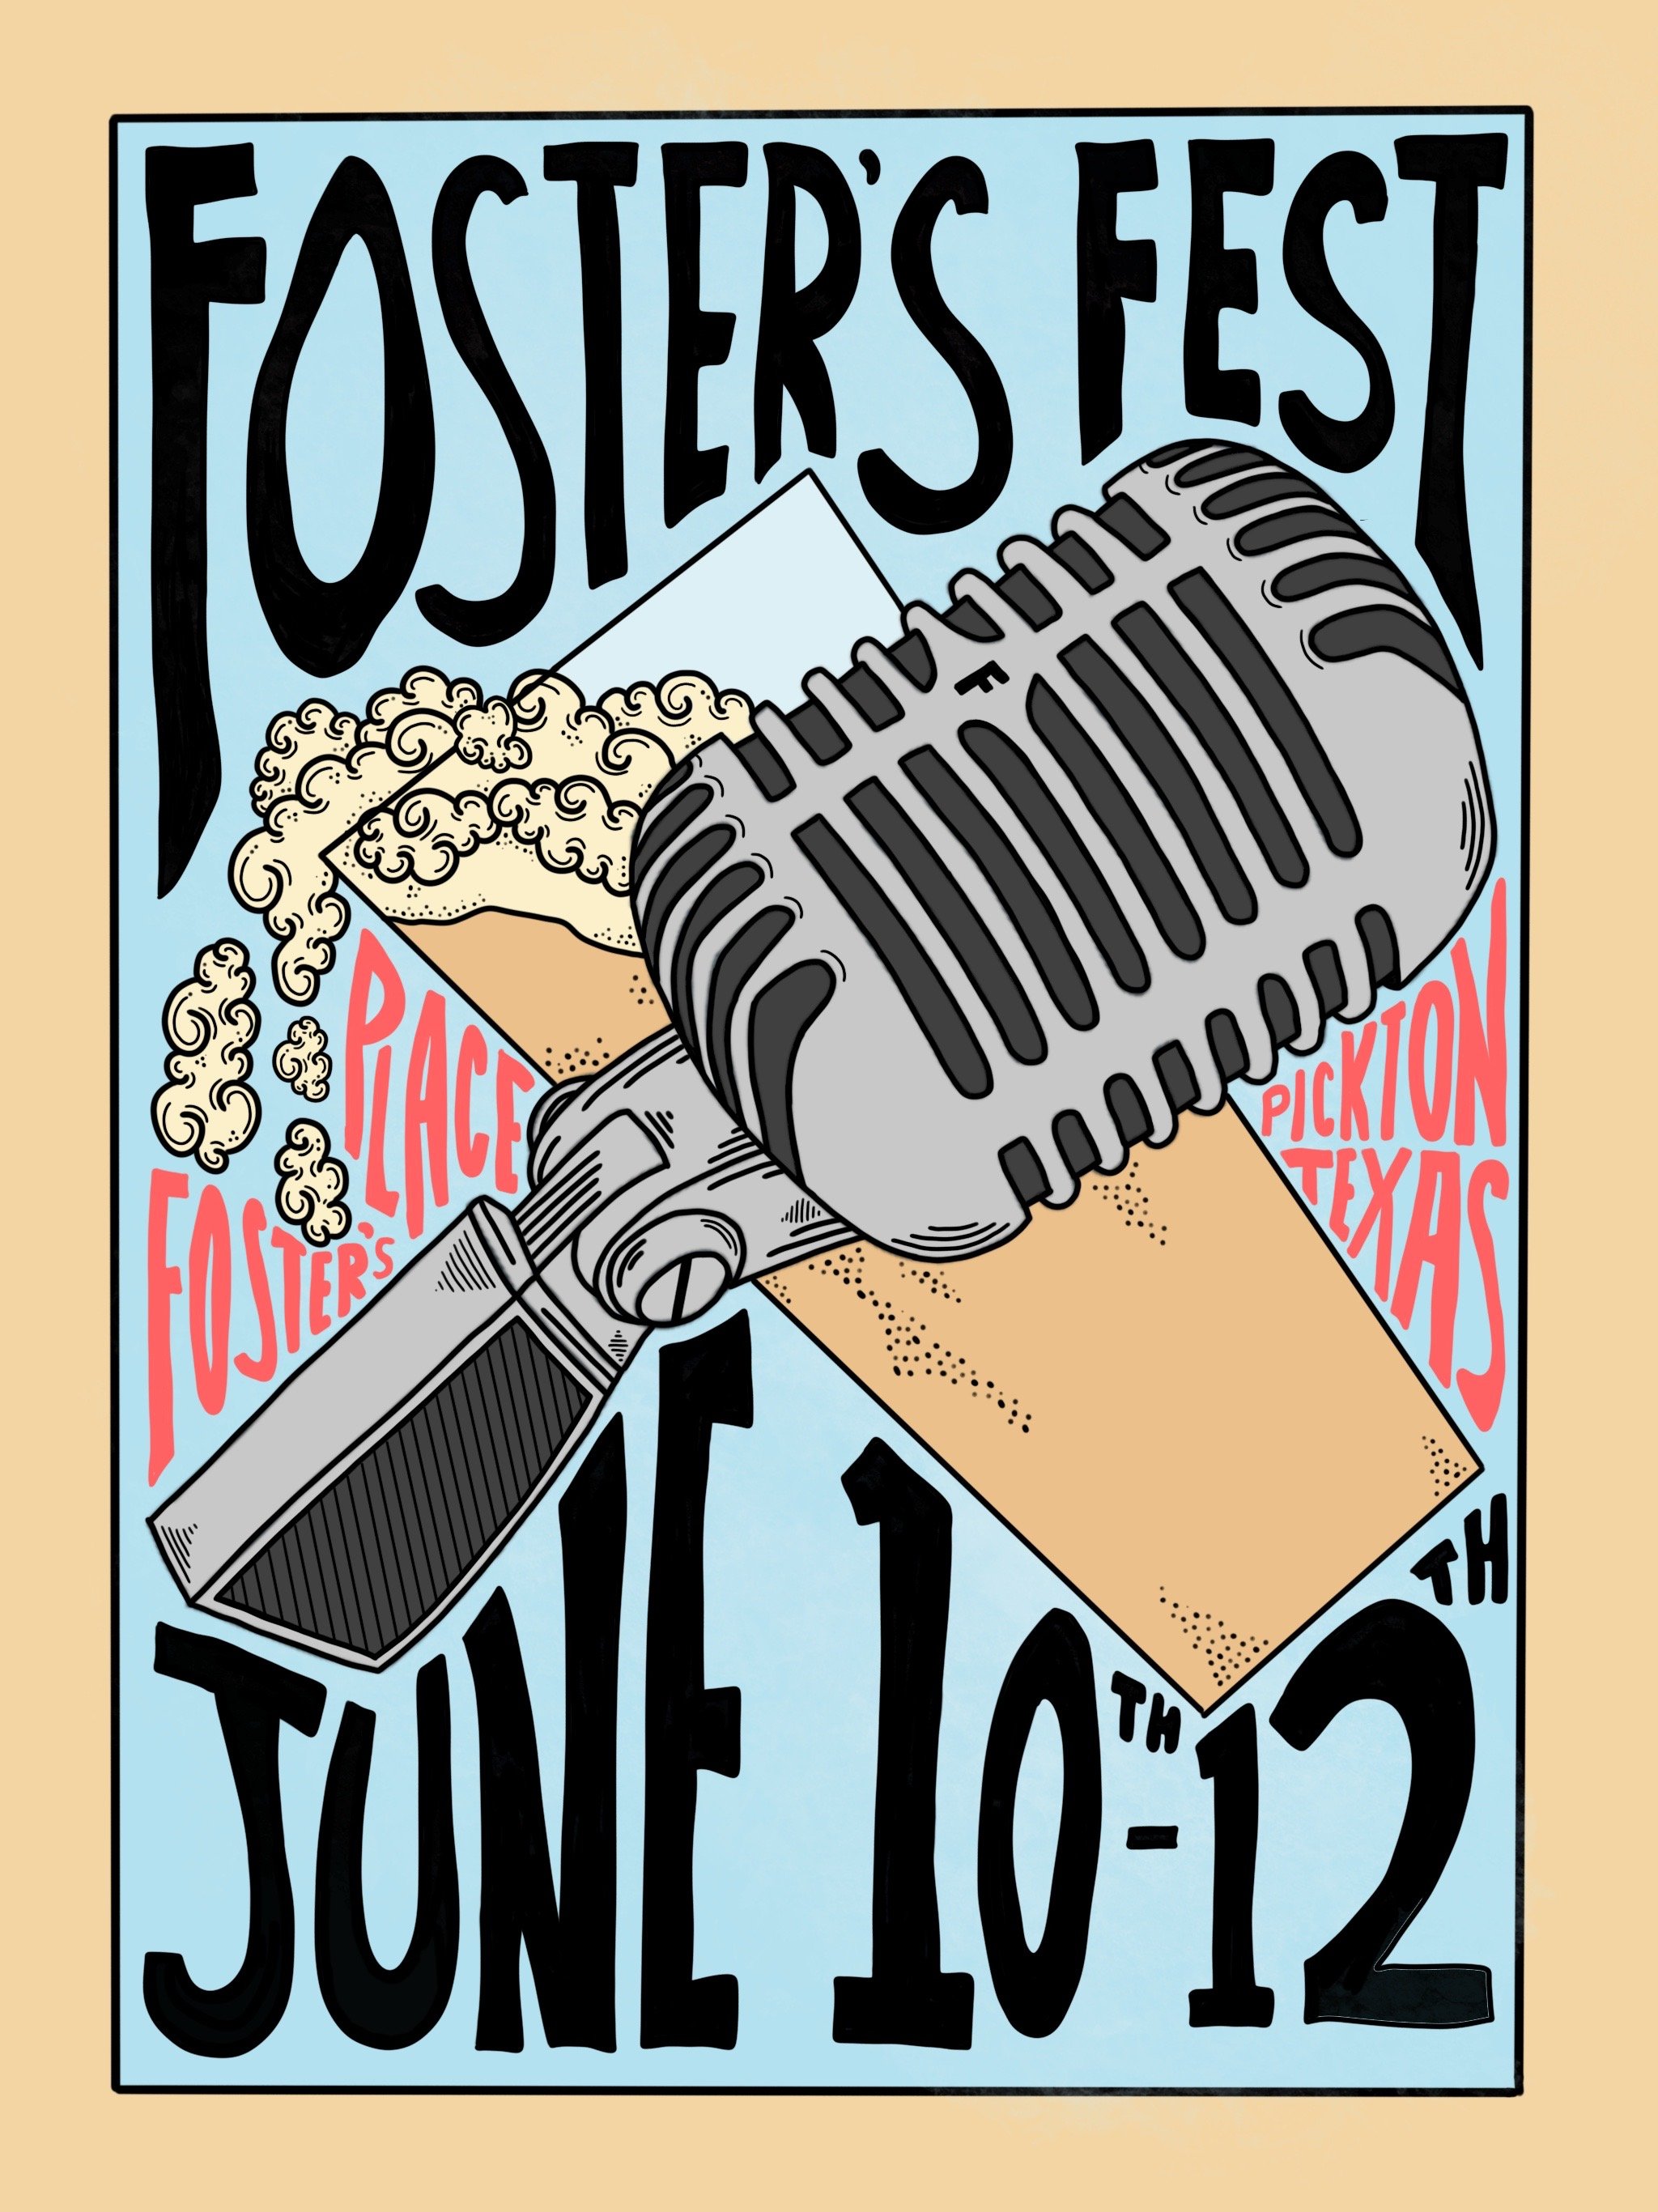 Foster's Fest Poster